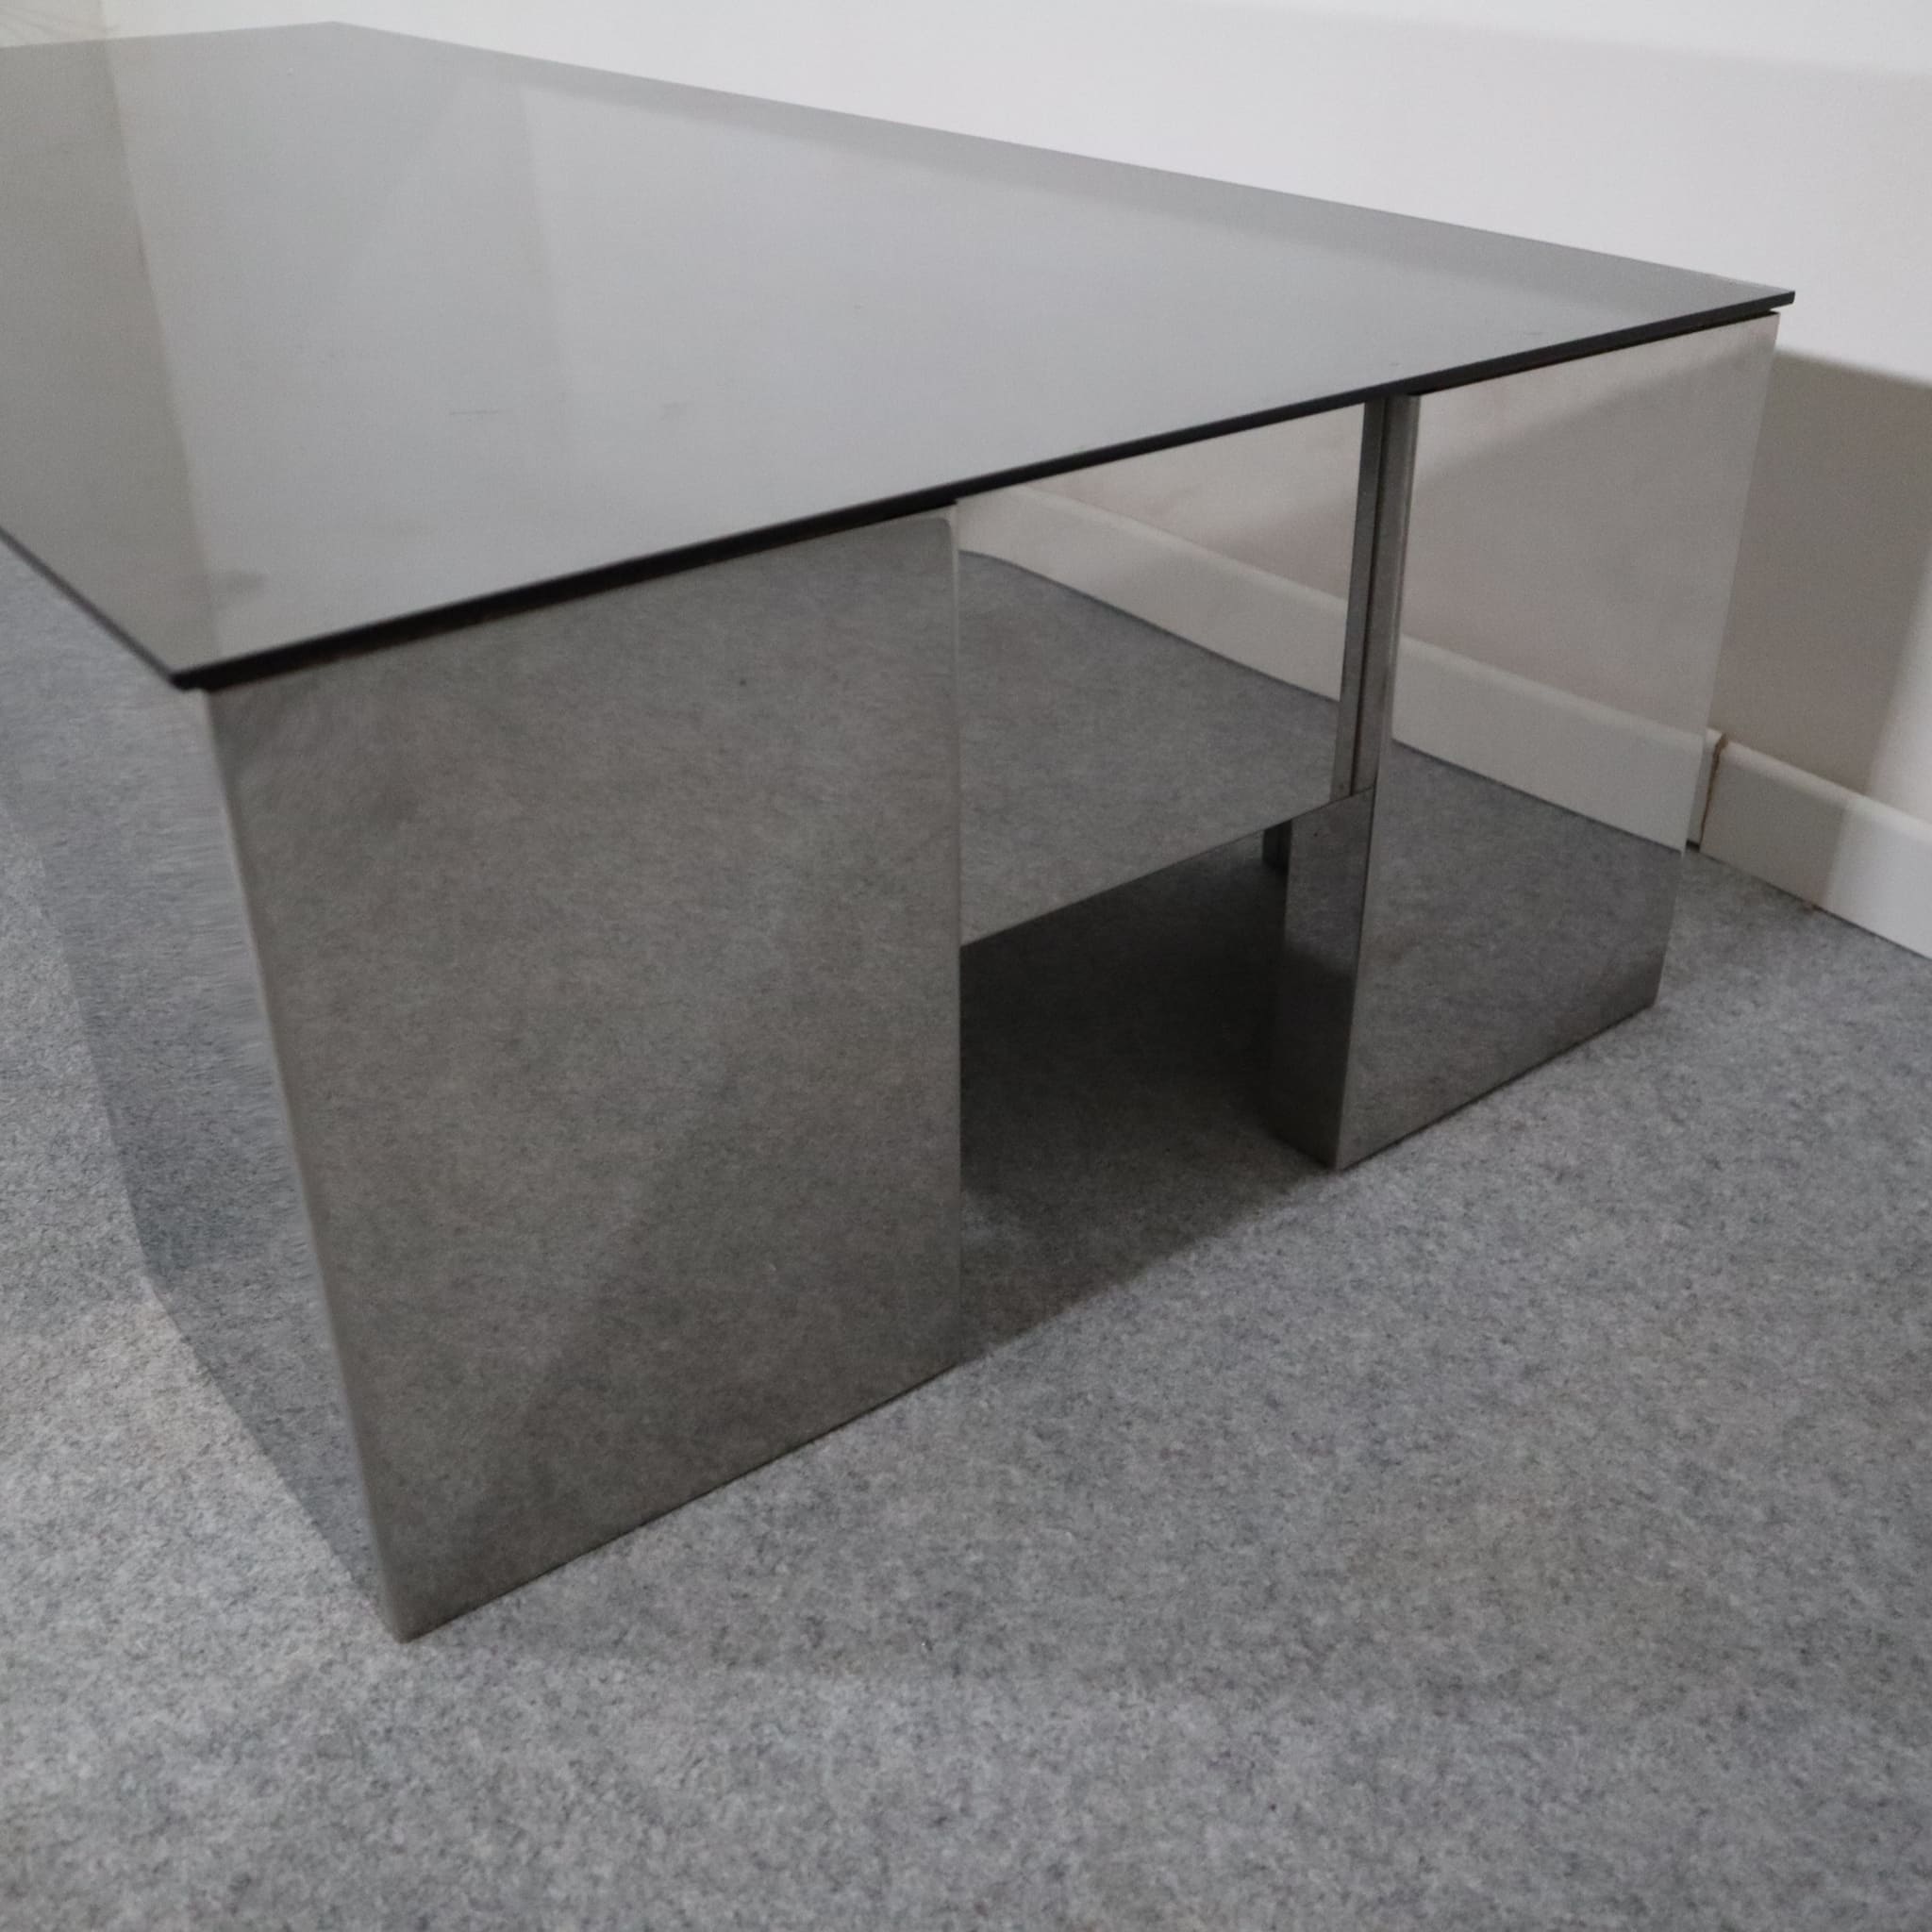 visioni-visionidepoca-depoca-coffee table-steel-smoked-mirror-70s-made-italy-furniture-design-modern-vintage-4